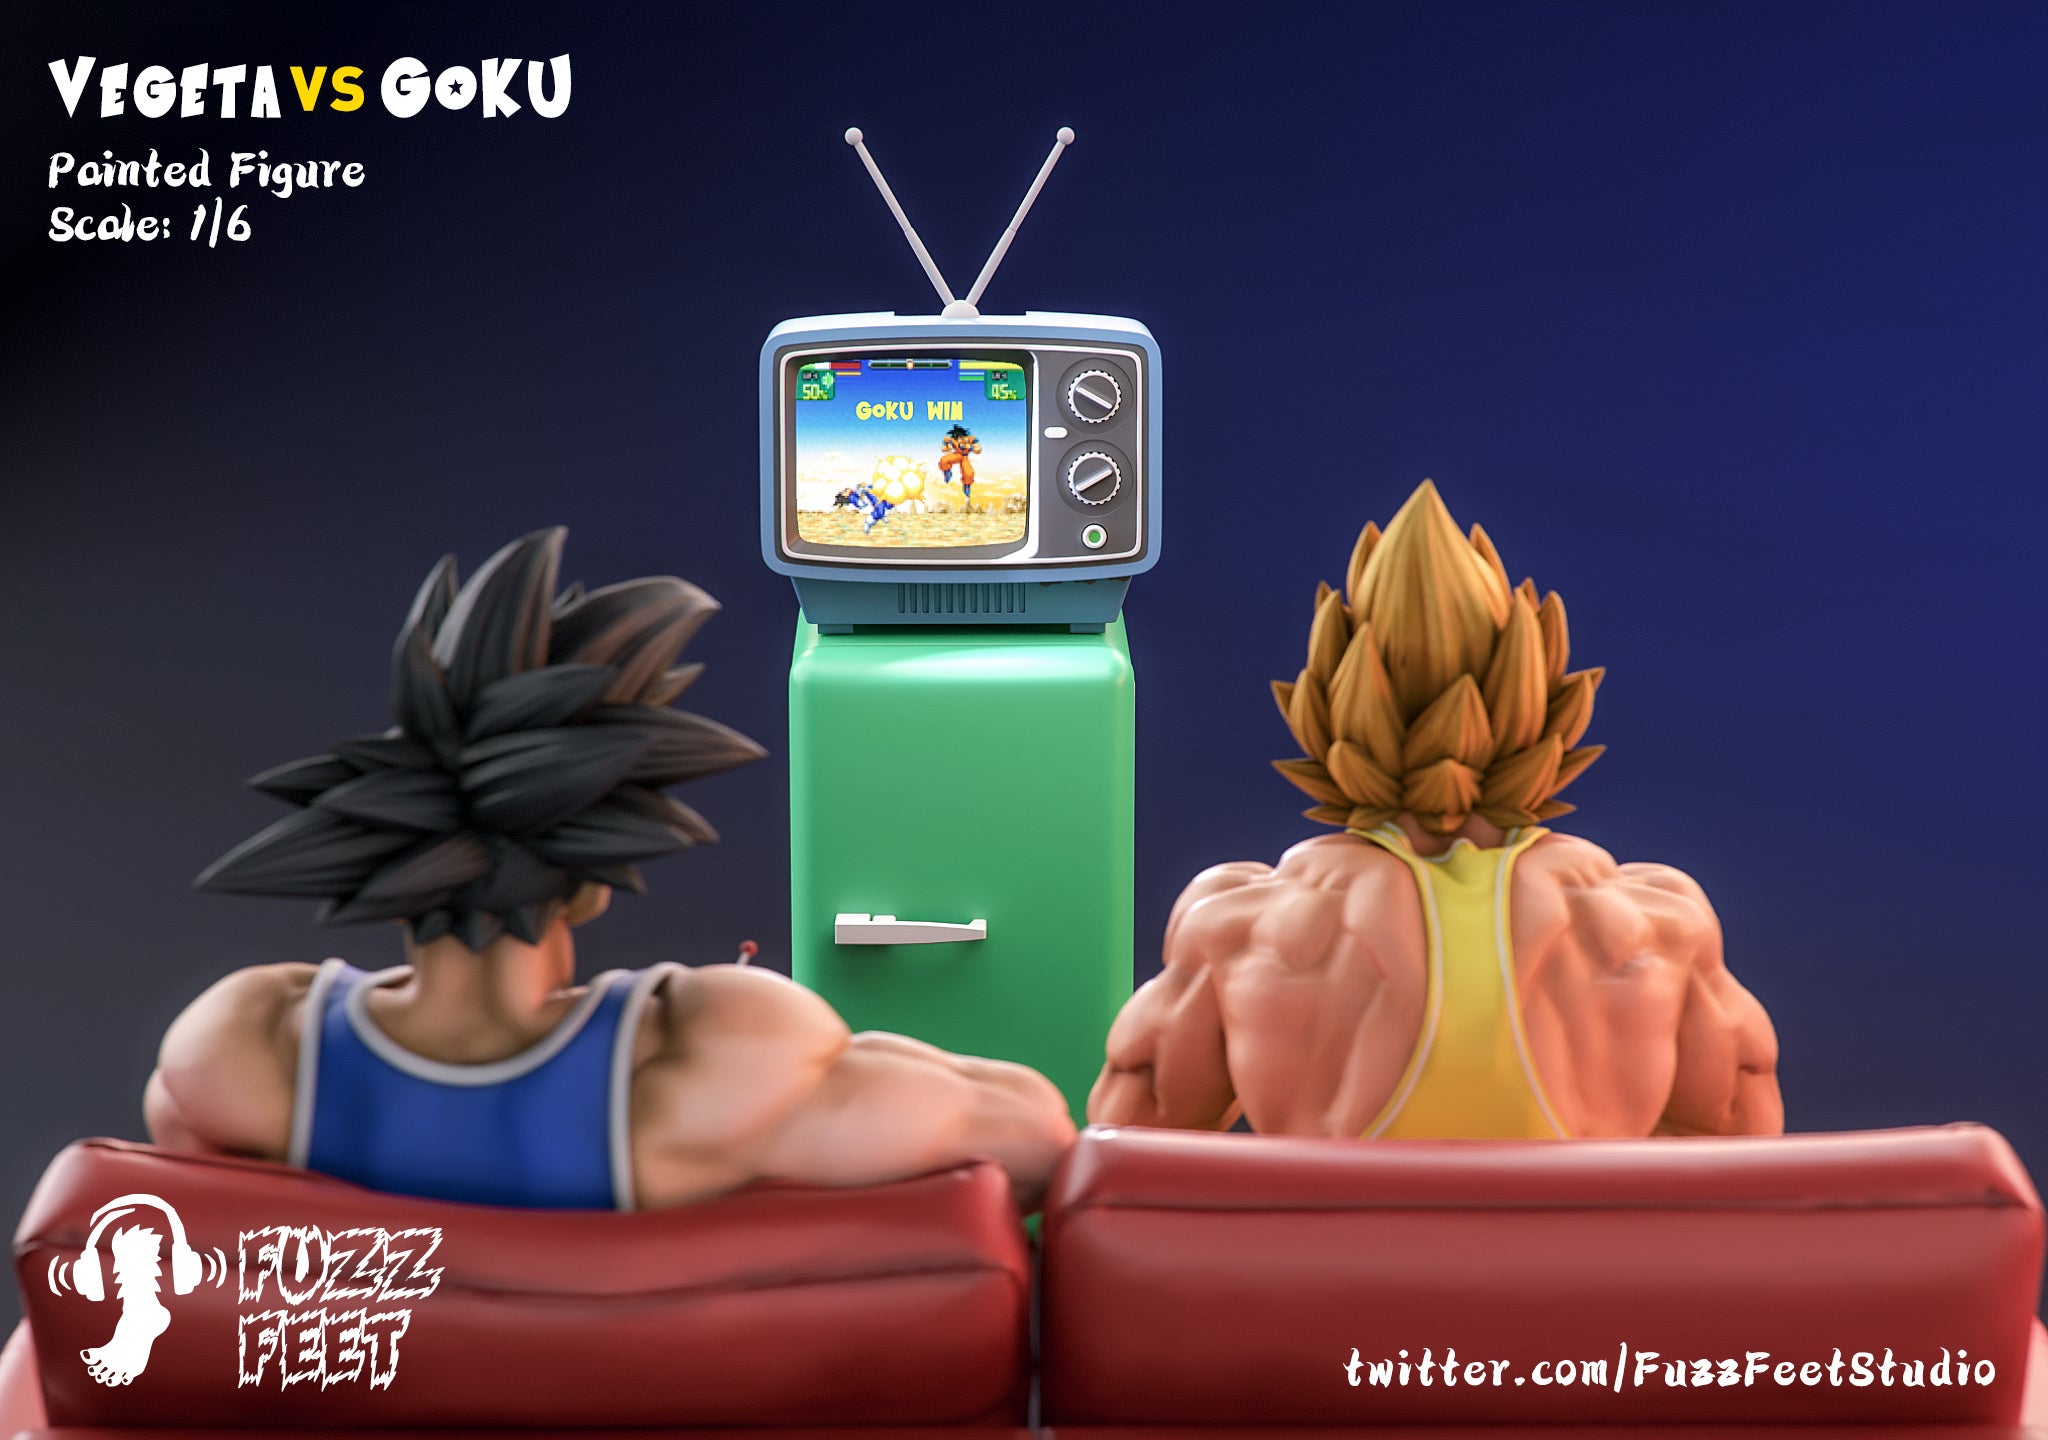 Dragon Ball Z Statue Turns Goku And Vegeta Into Hot Gamers